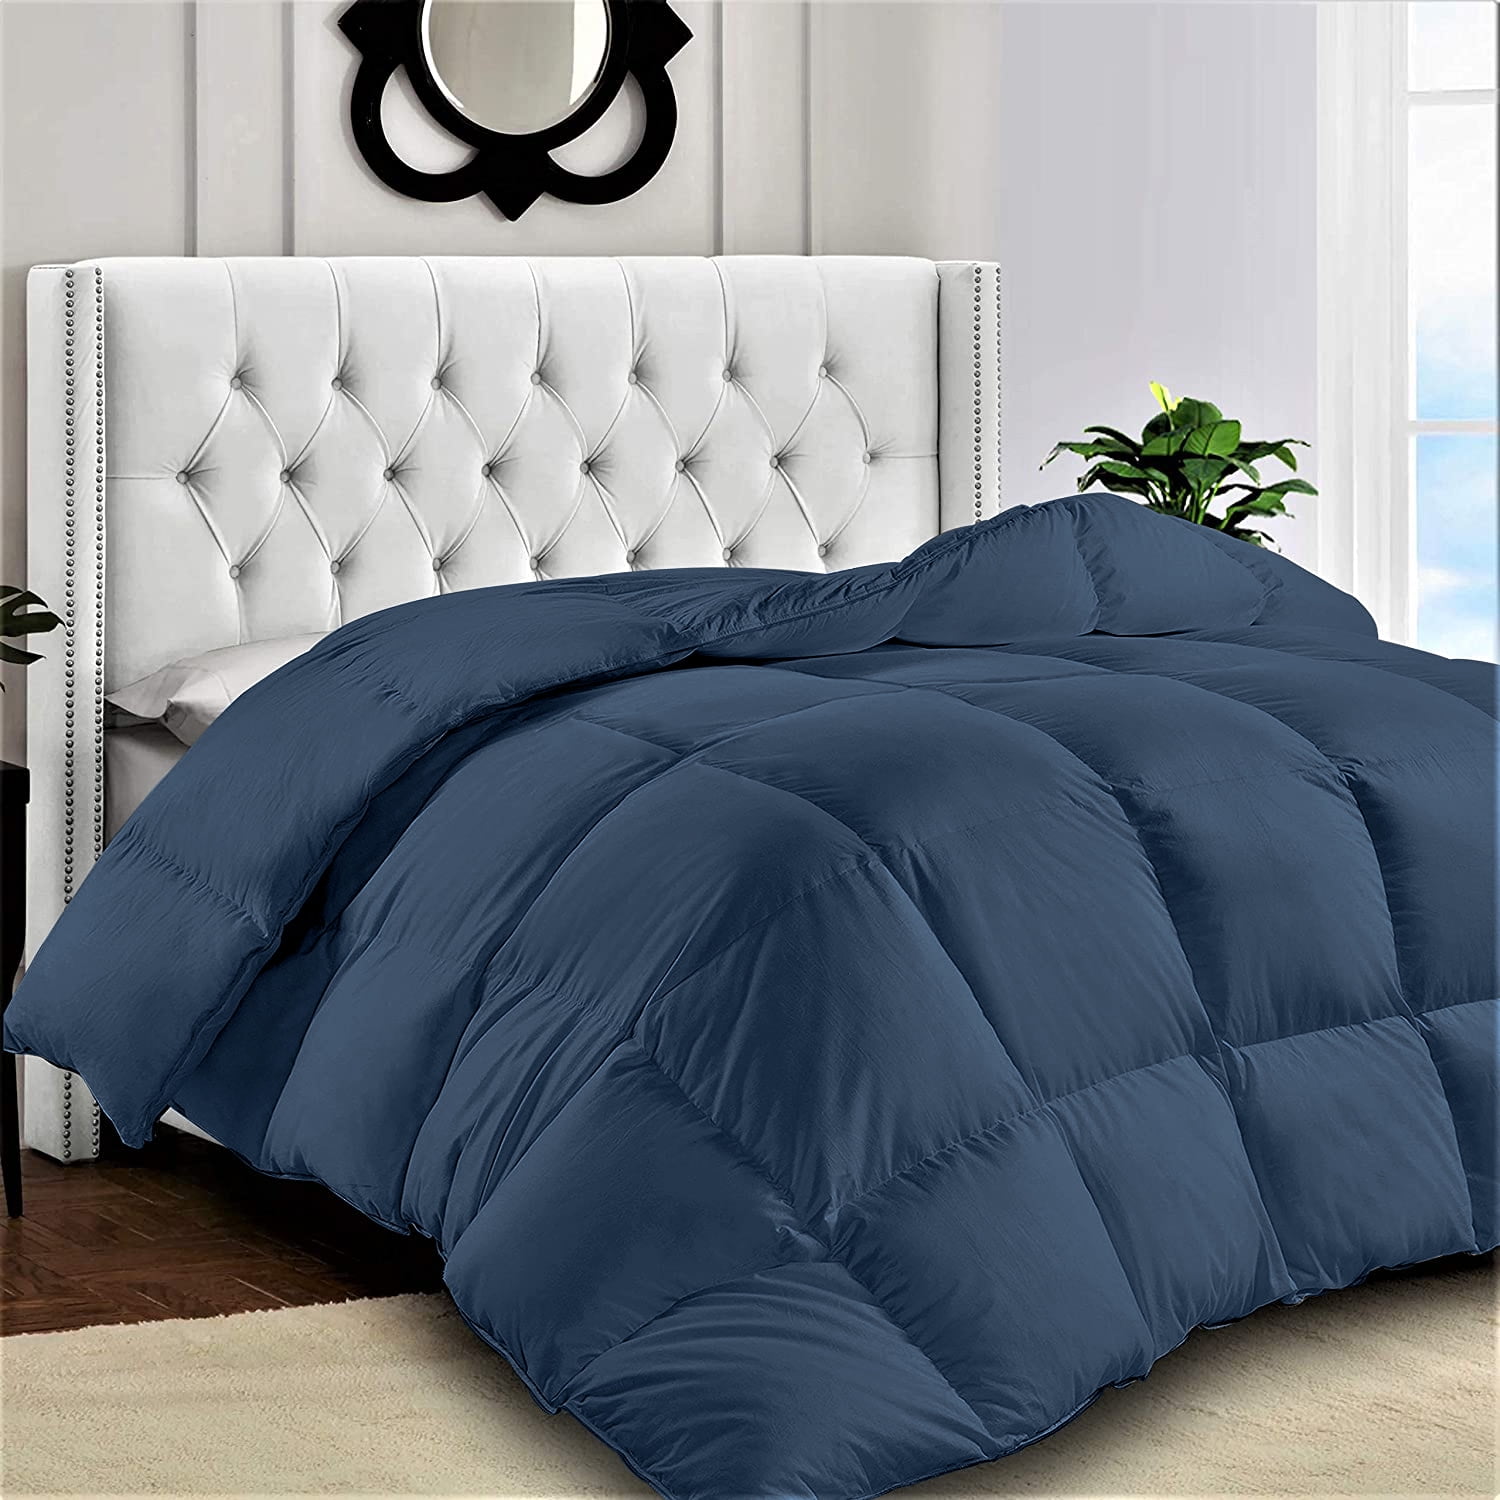 Bedding Comforter Duvet Insert With, What Size Insert For Queen Duvet